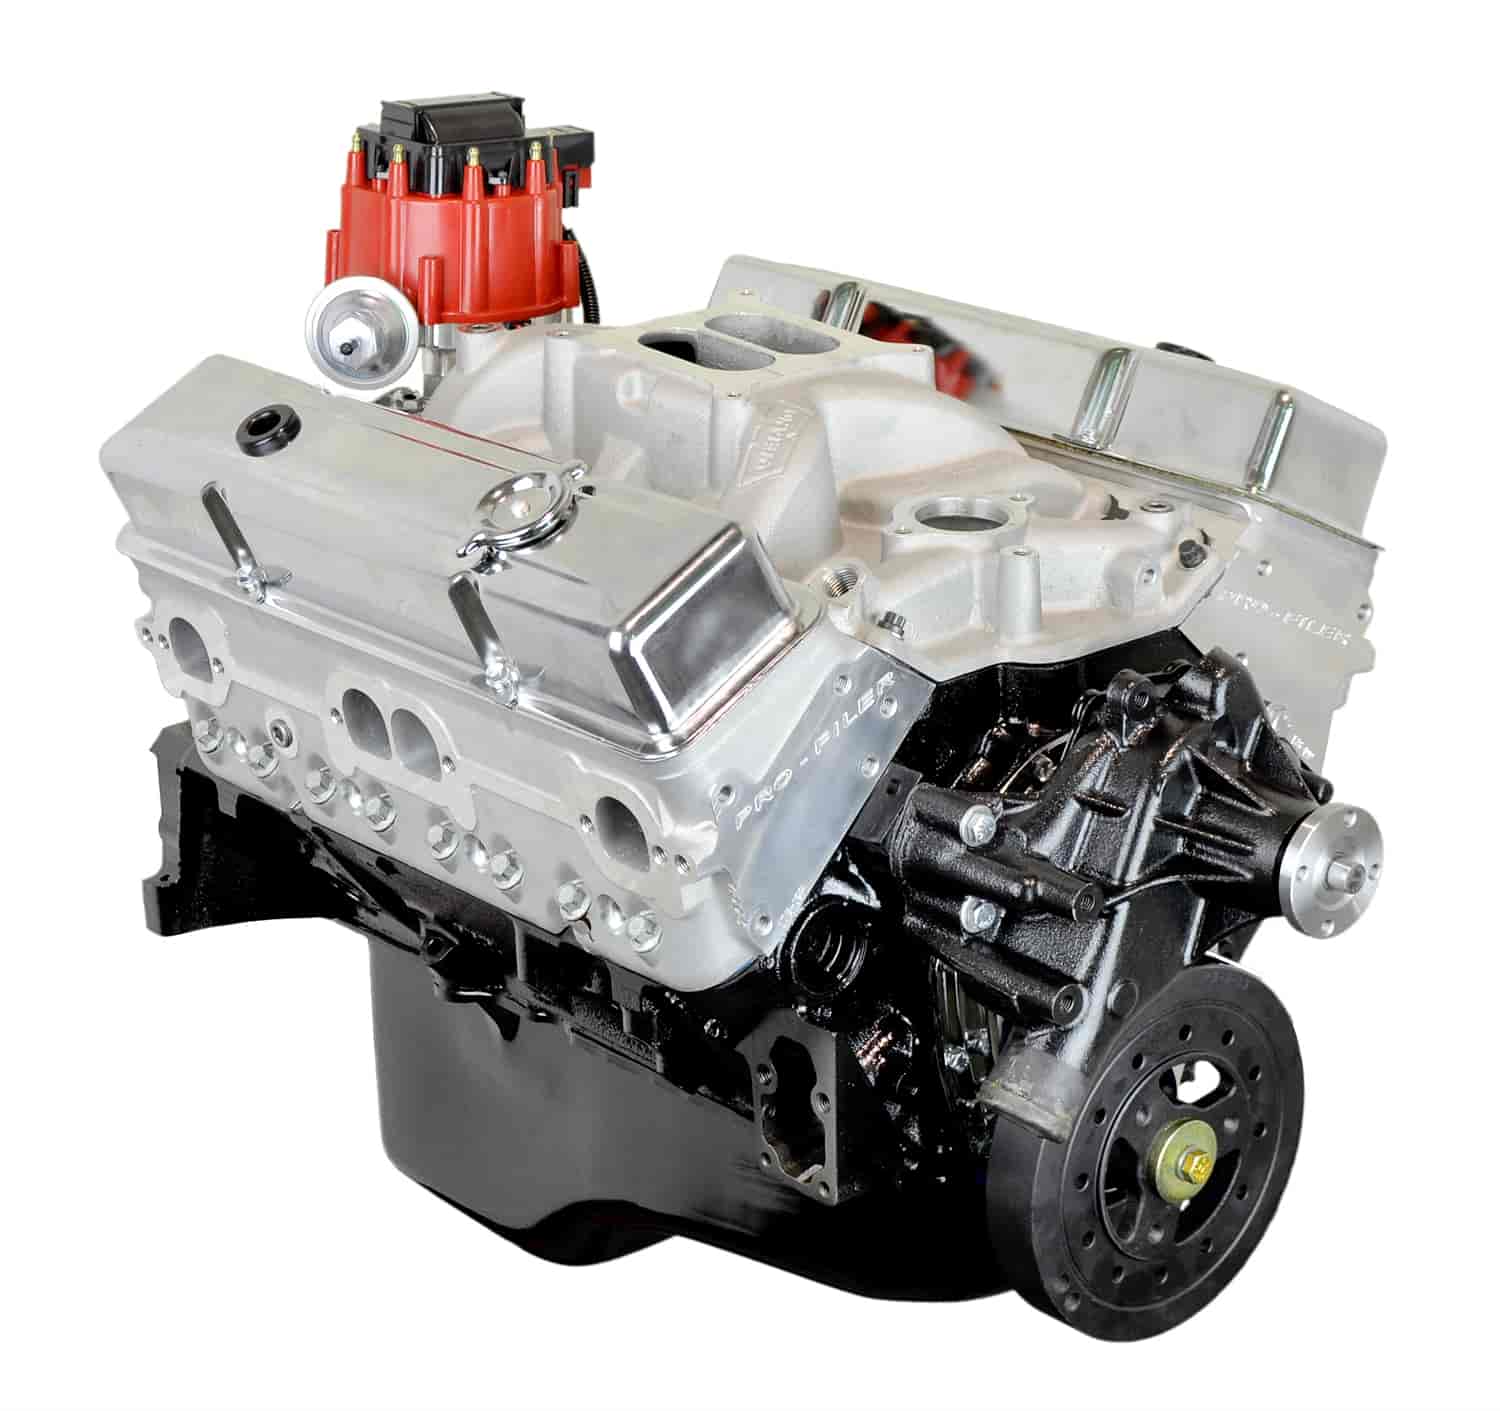 High Performance Crate Engine Small Block Chevy 383ci / 470HP / 490TQ